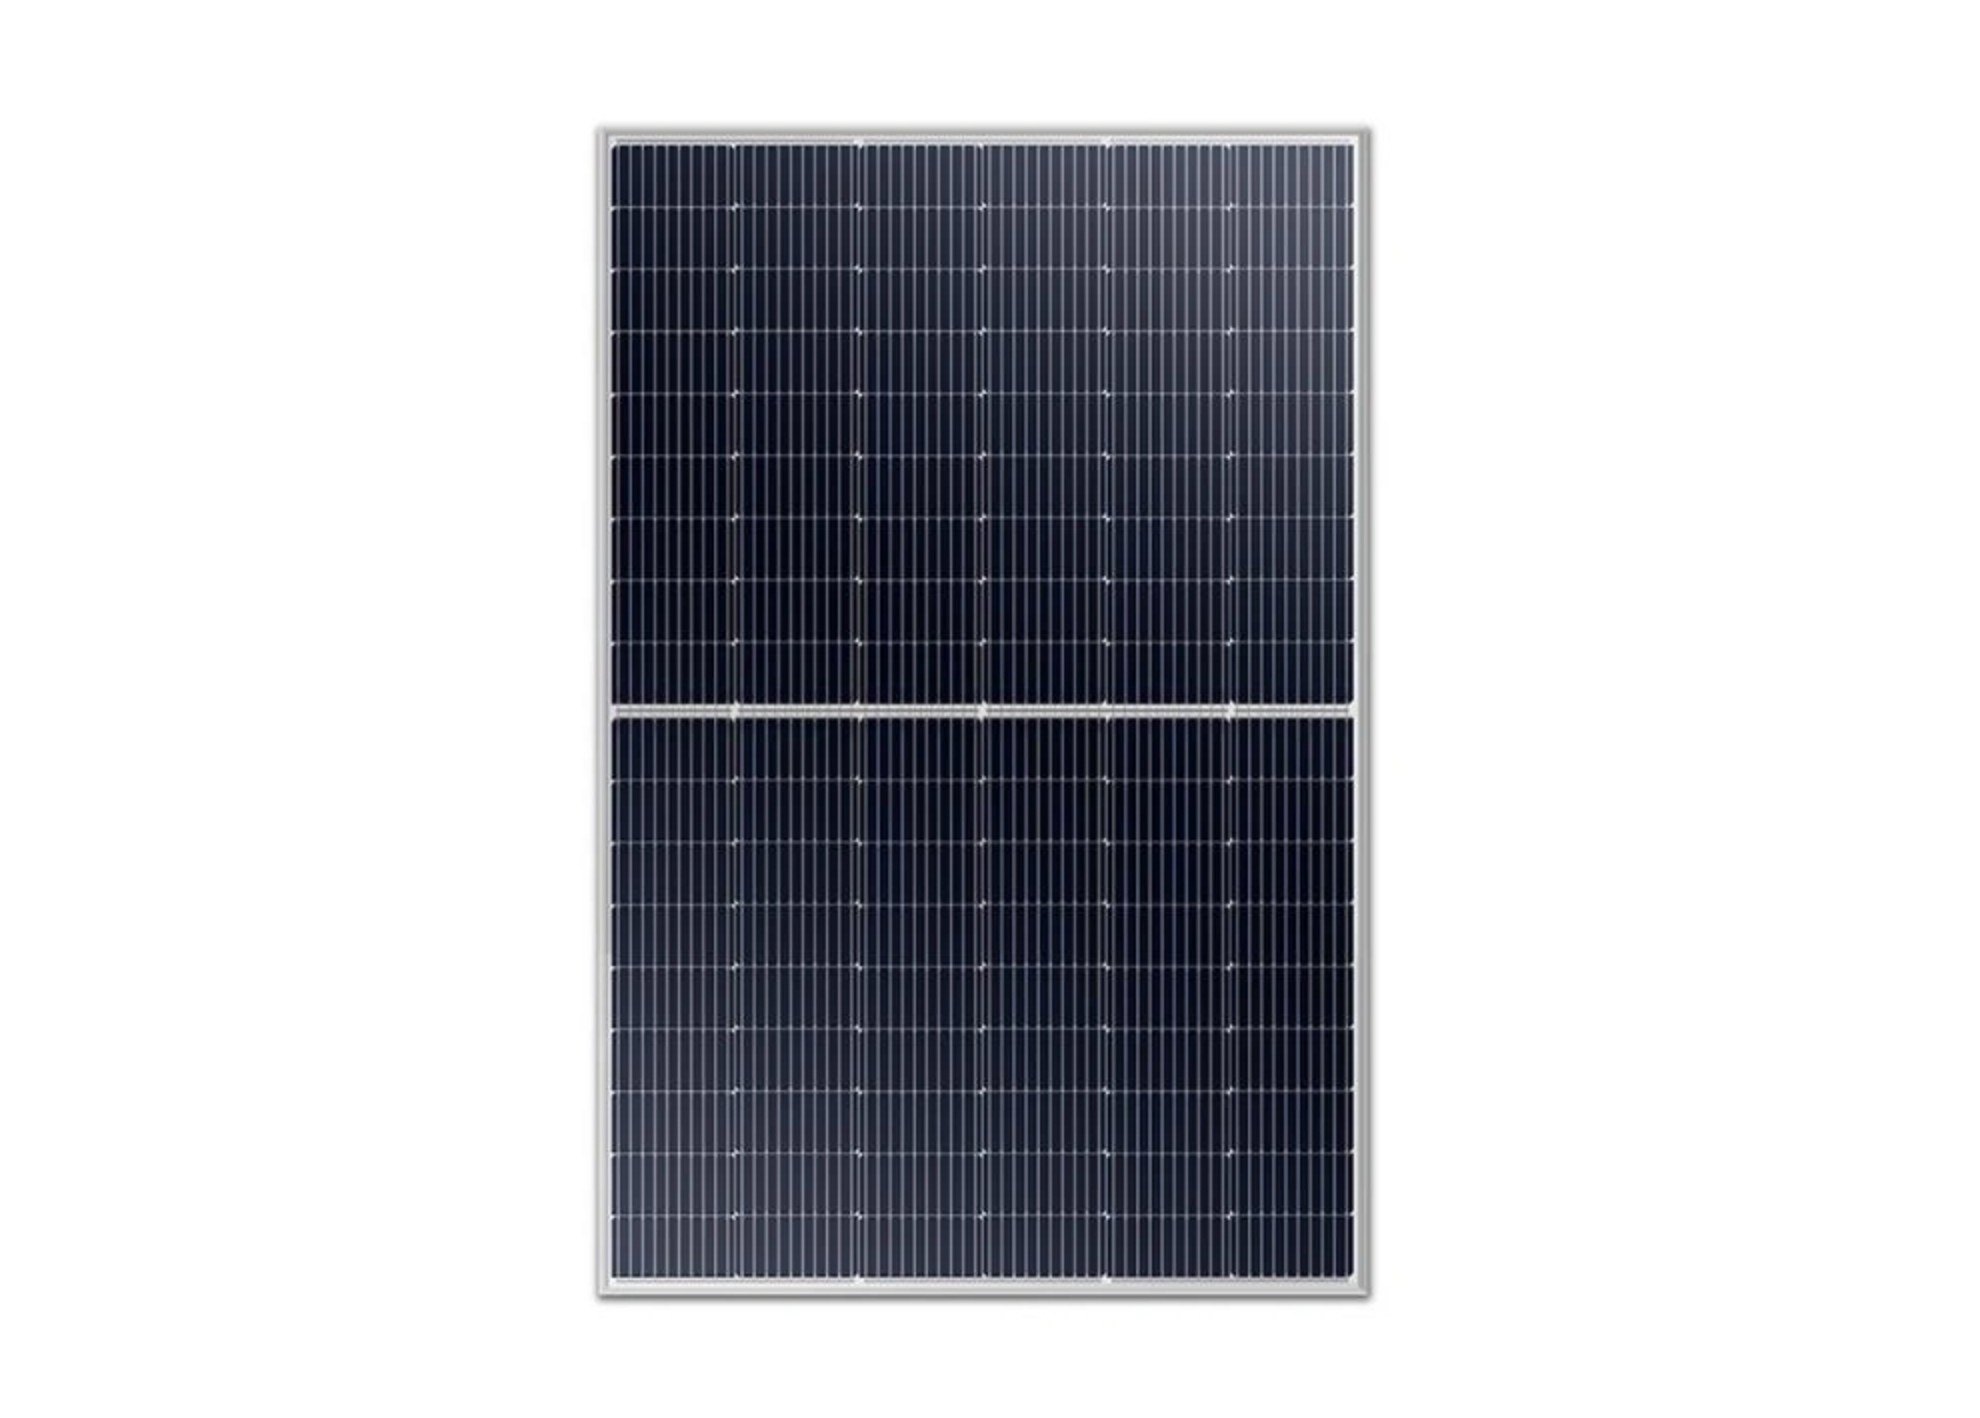 Solárny panel SUNKET 410W strieborný, paleta(36ks) FV SUNKET SKT410M10 S 36